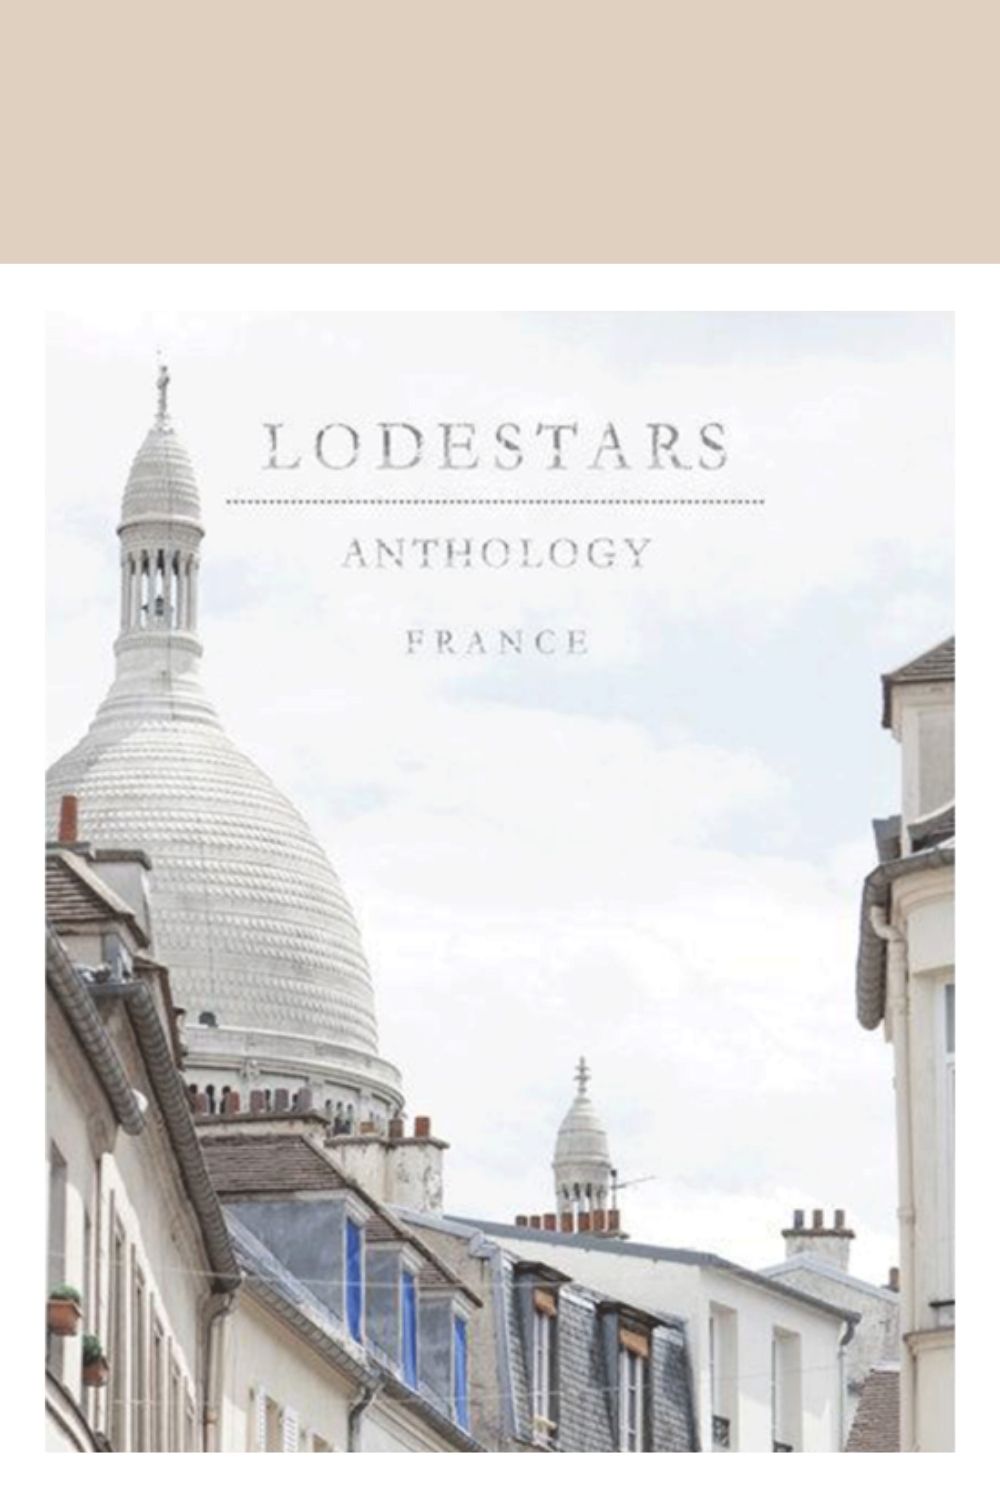 Front cover of Lodestars Anthology France